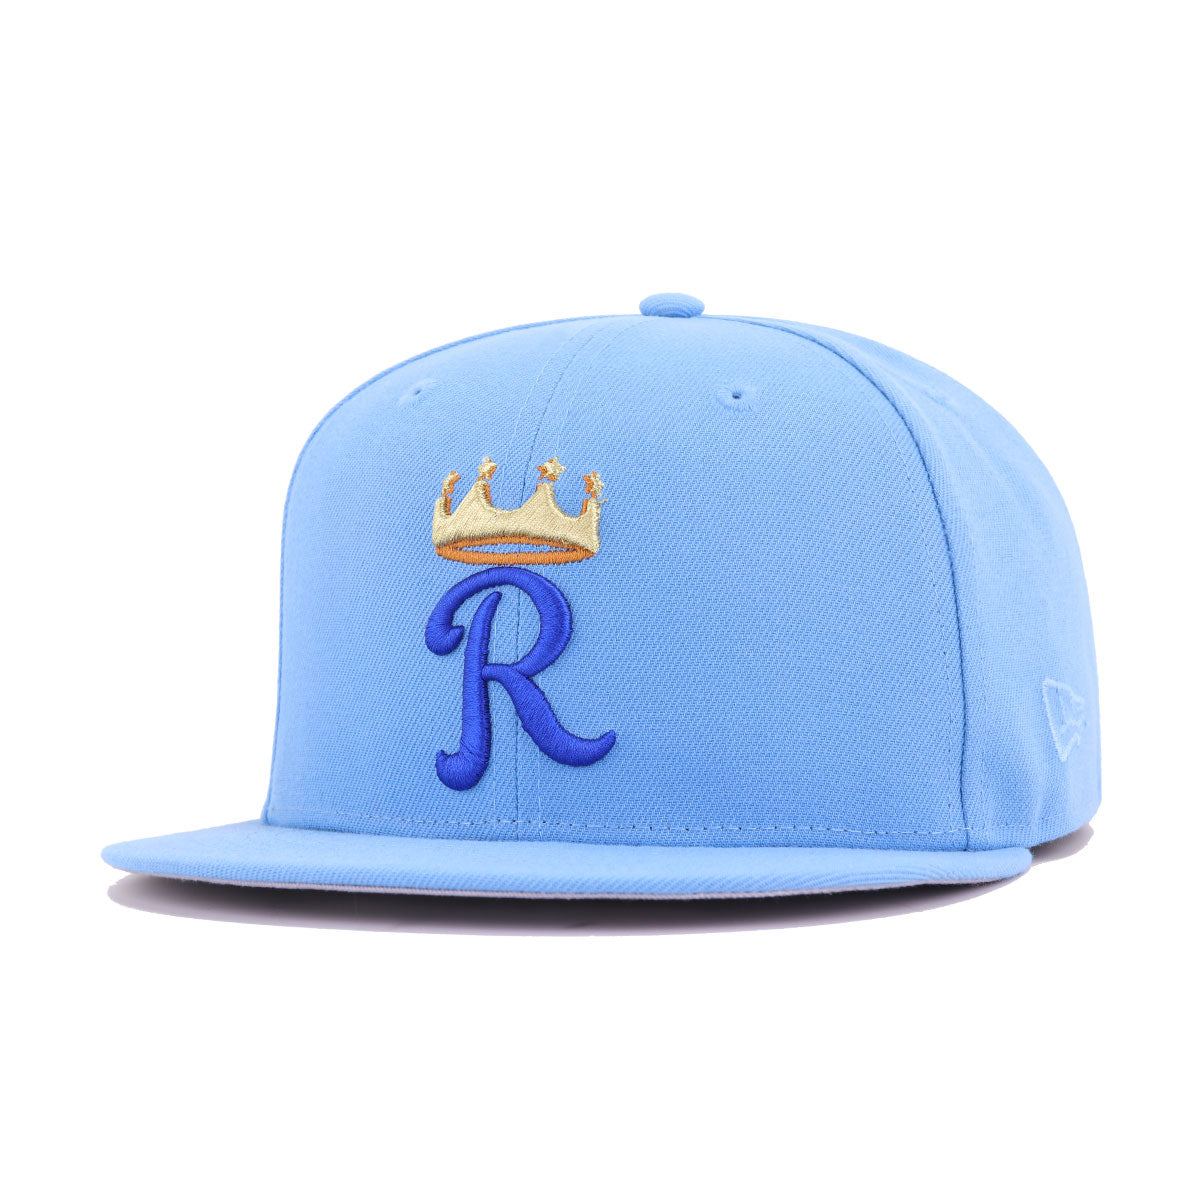 New Era 59 / 50 Hat - Kansas City Royals - Sky Blue / Royal Blue - 7 / Sky  Blue